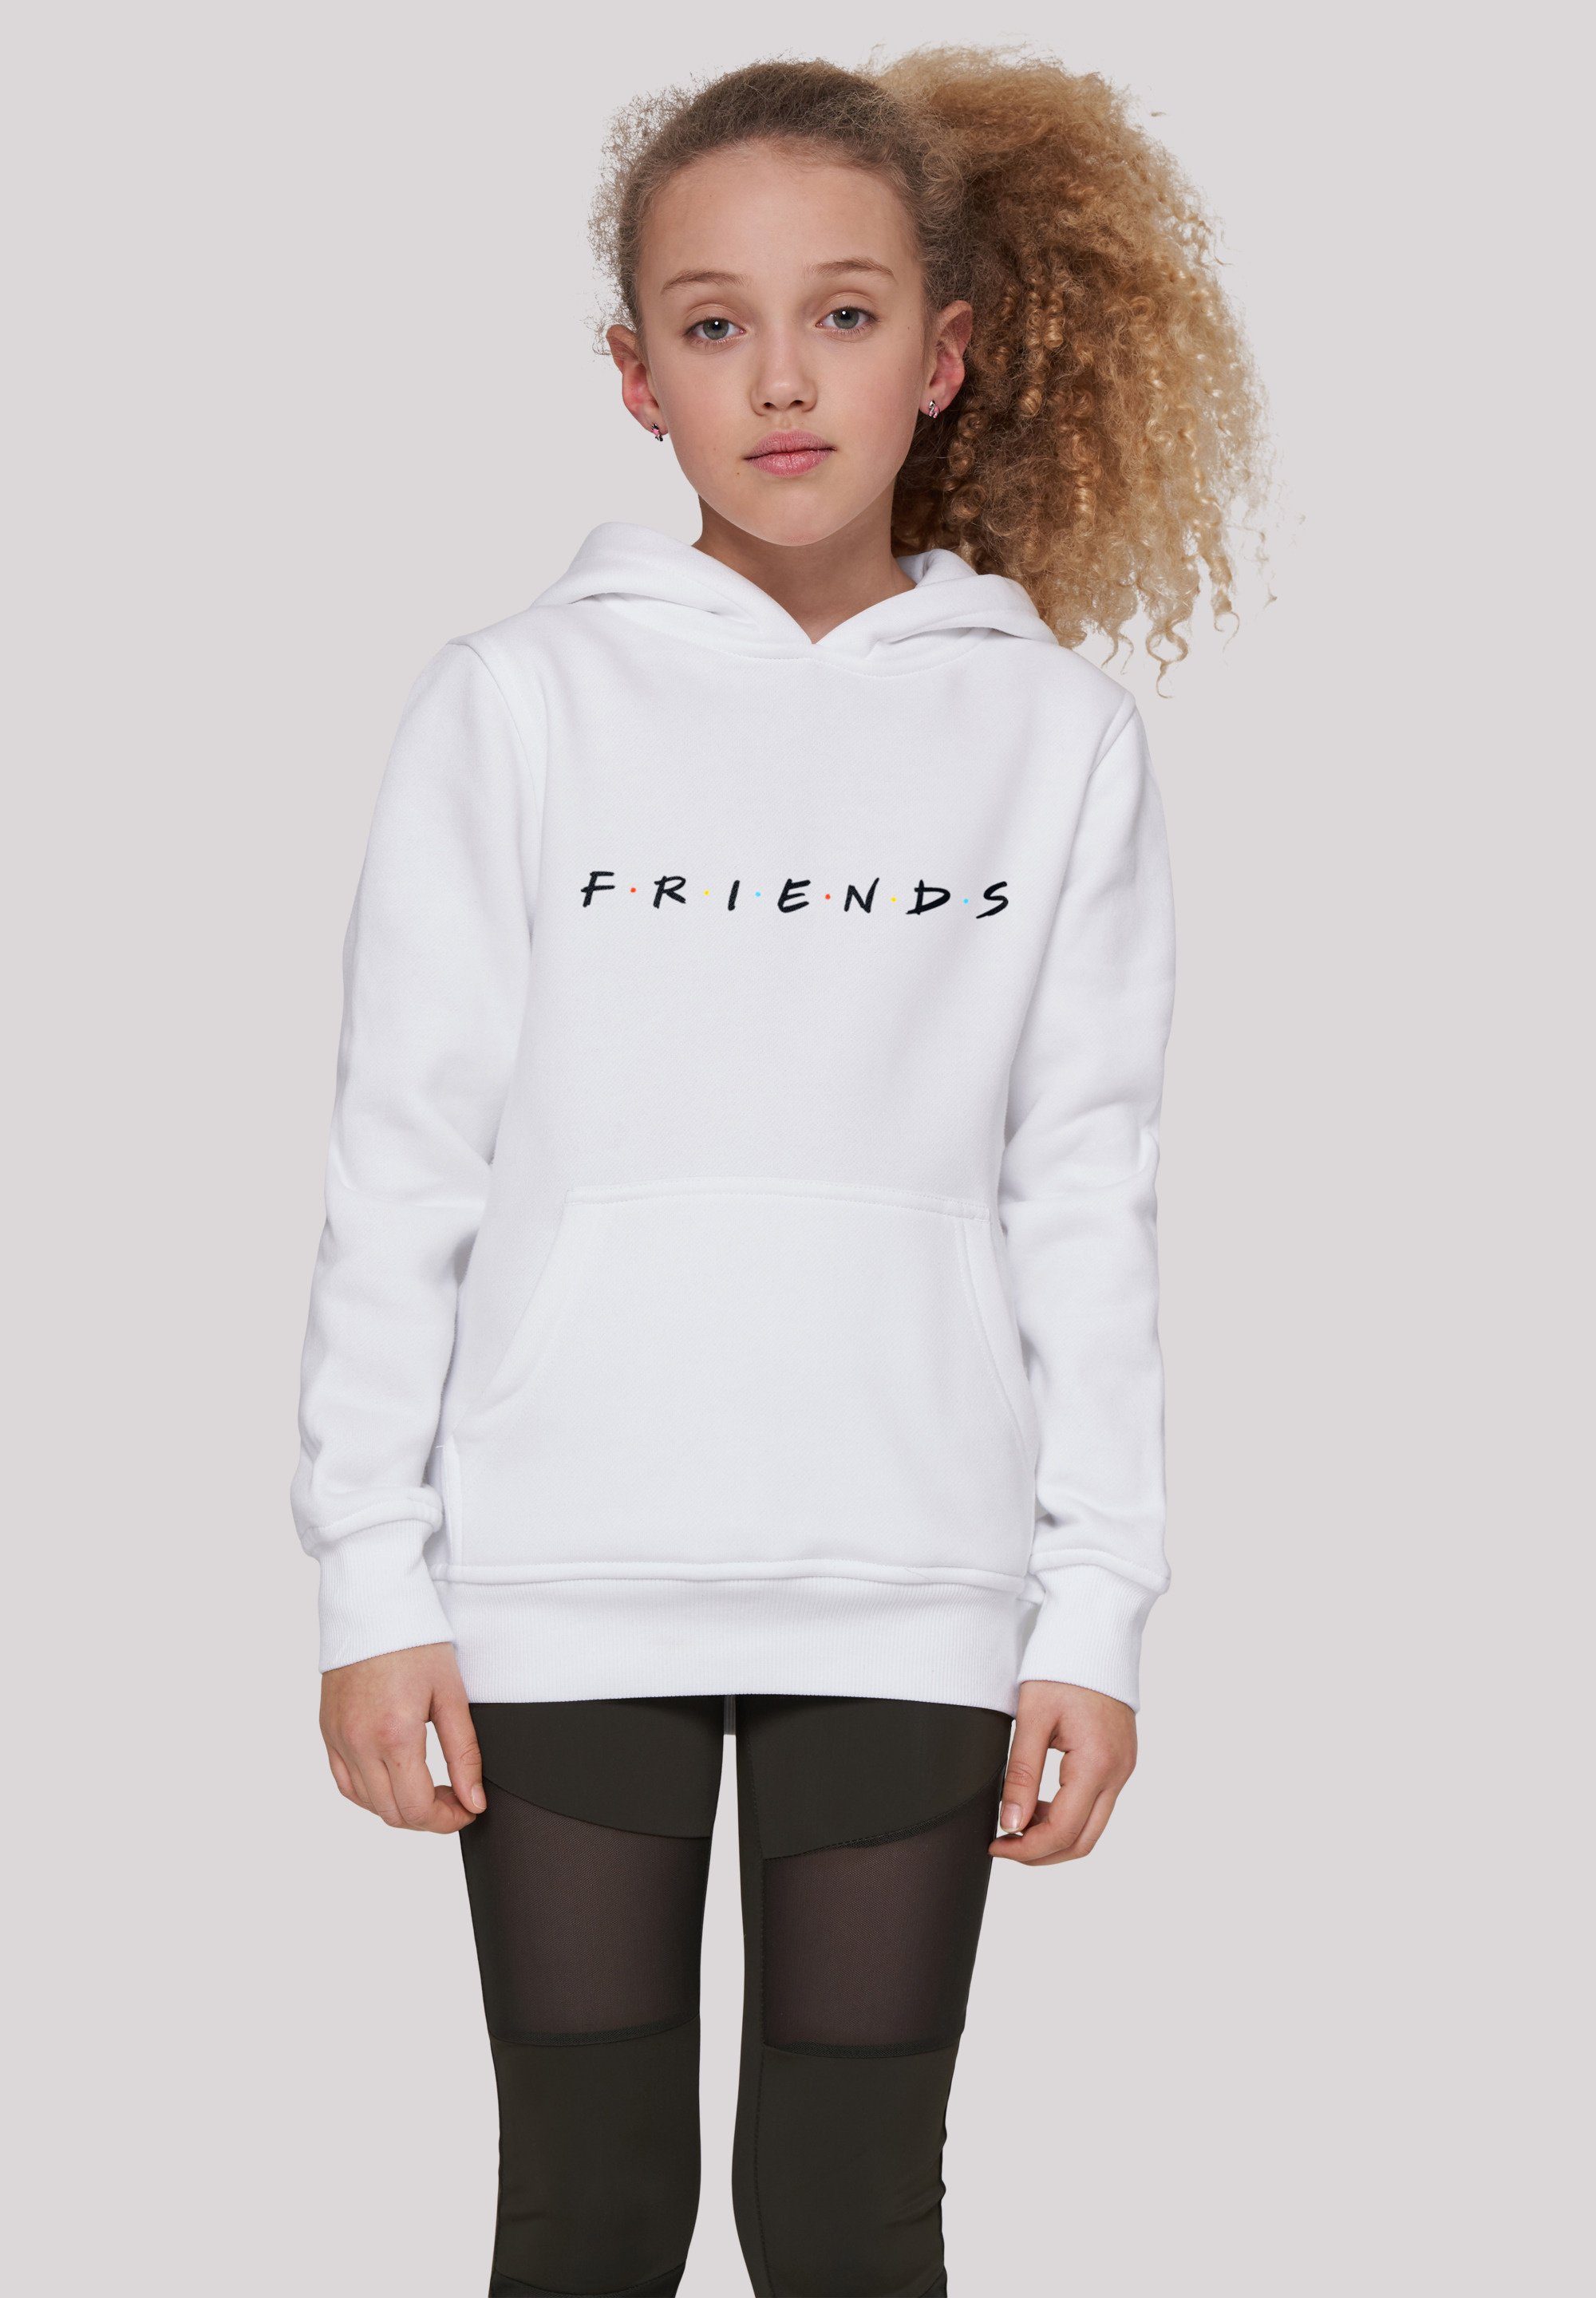 F4NT4STIC Sweatshirt FRIENDS TV Serie Text Logo WHT Unisex Kinder,Premium Merch,Jungen,Mädchen,Bedruckt